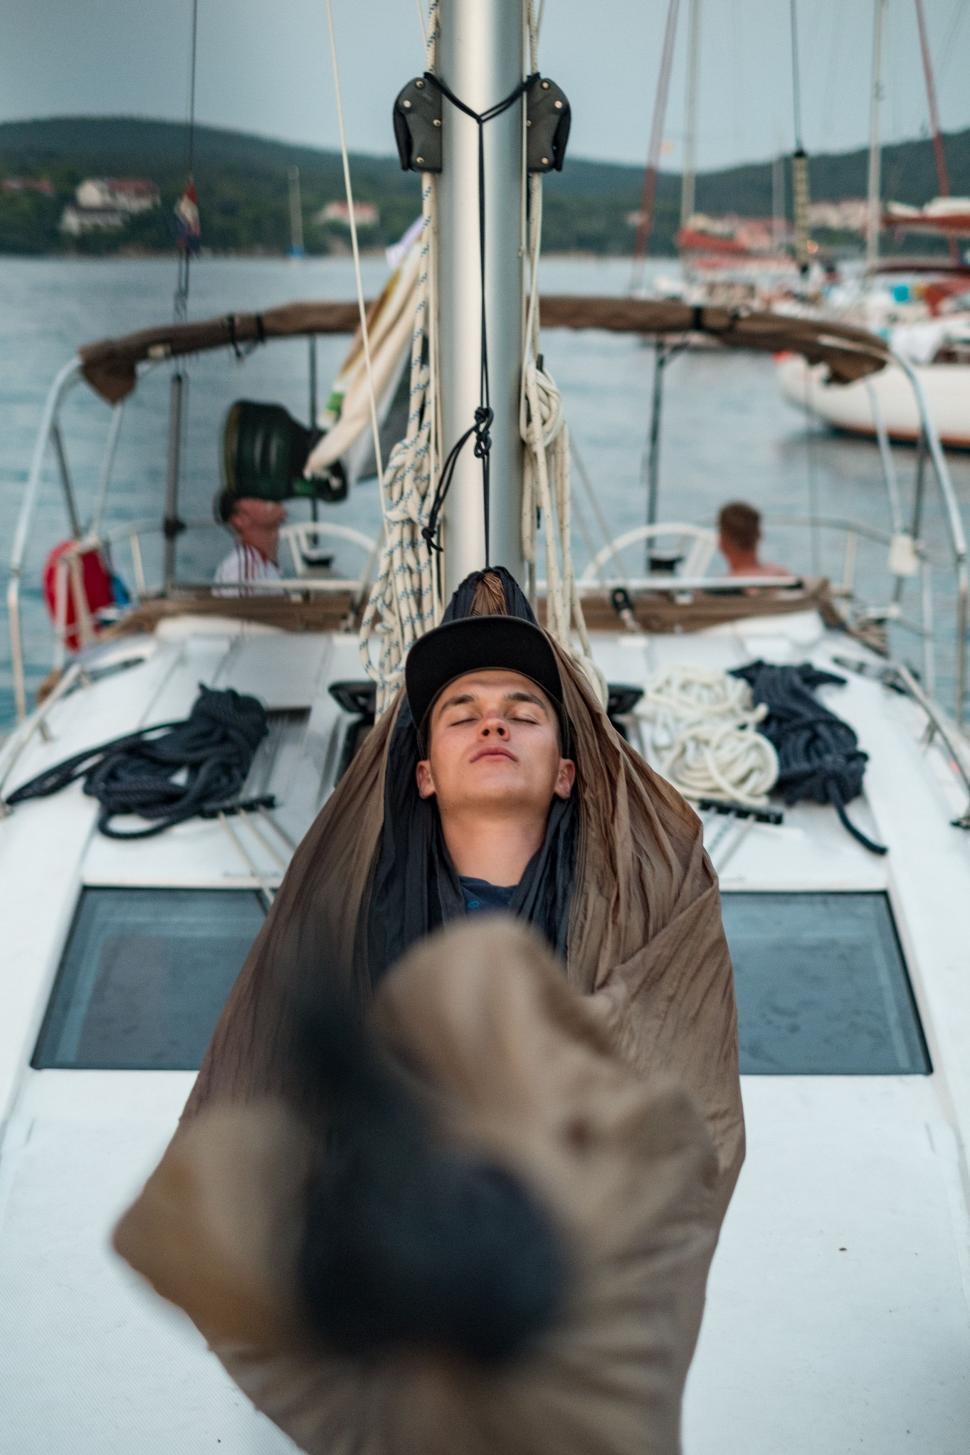 Free Image of Man Sleeping on Sailboat on Water 